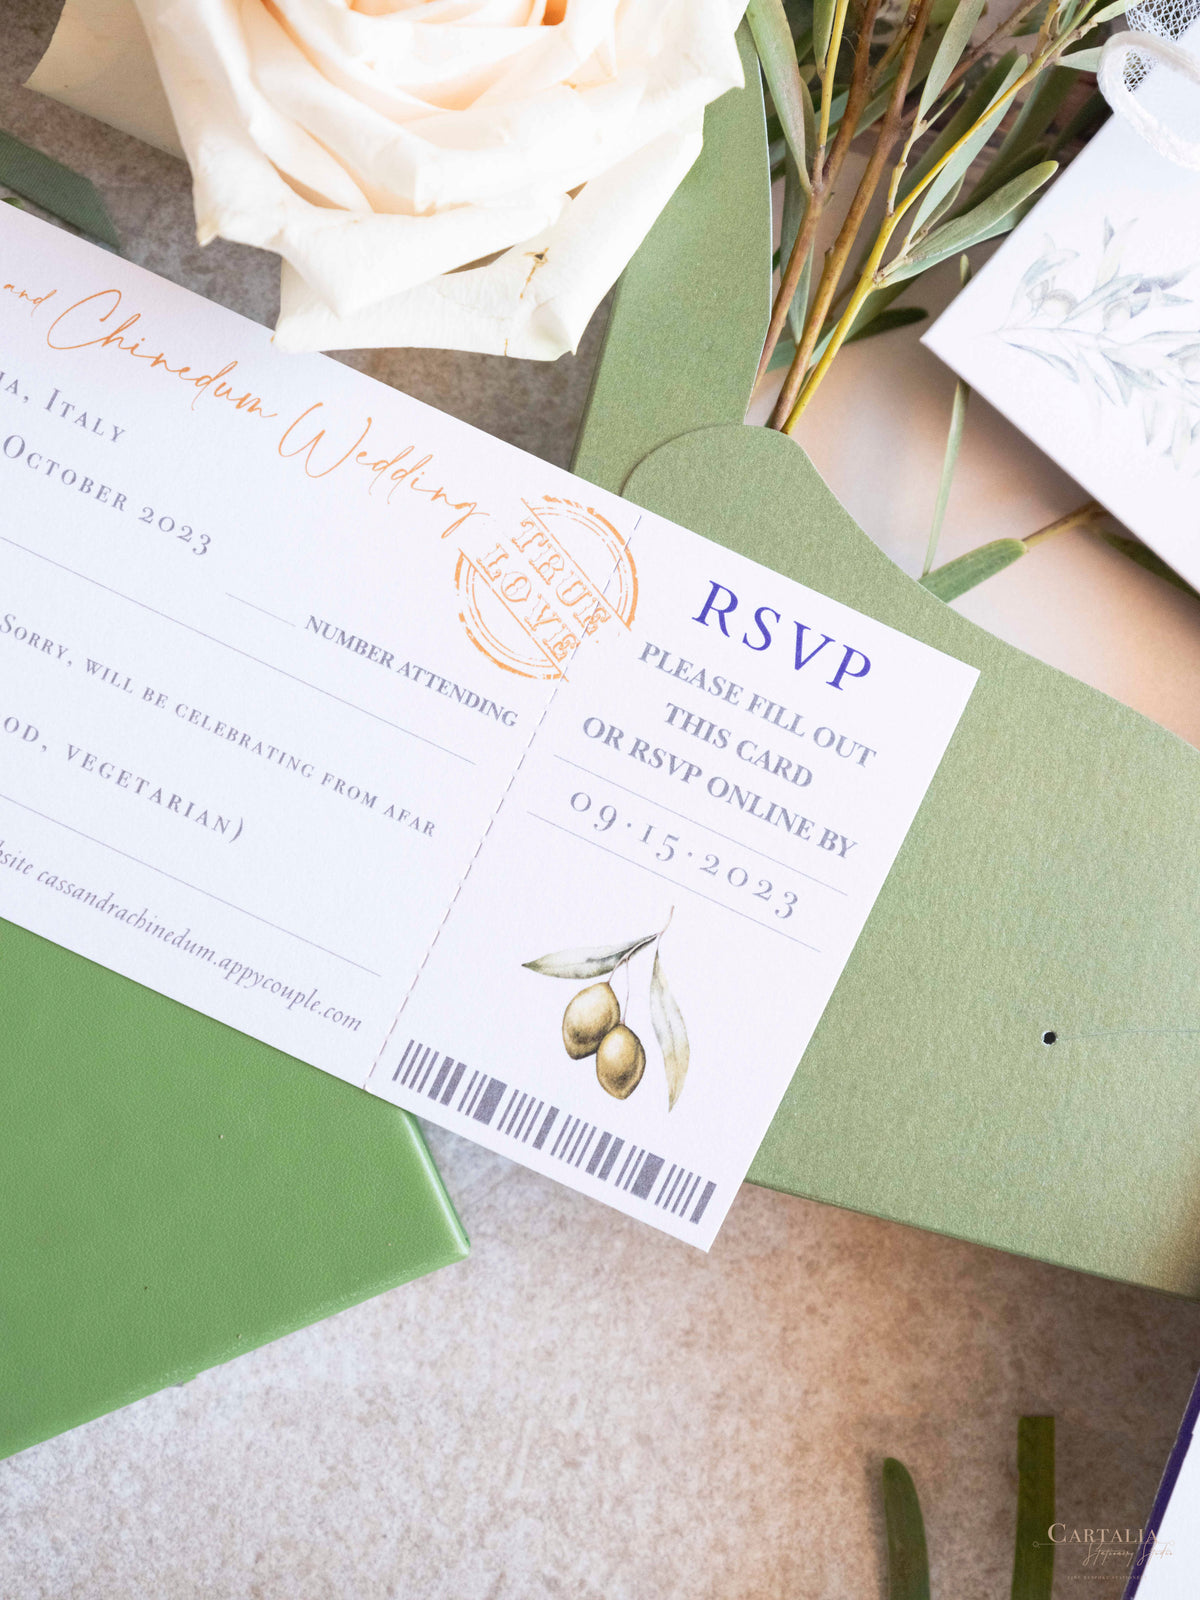 Luxury Wedding Box with Passport in Vegan Leather & Venue | Puglia, Italy| Bespoke C&C